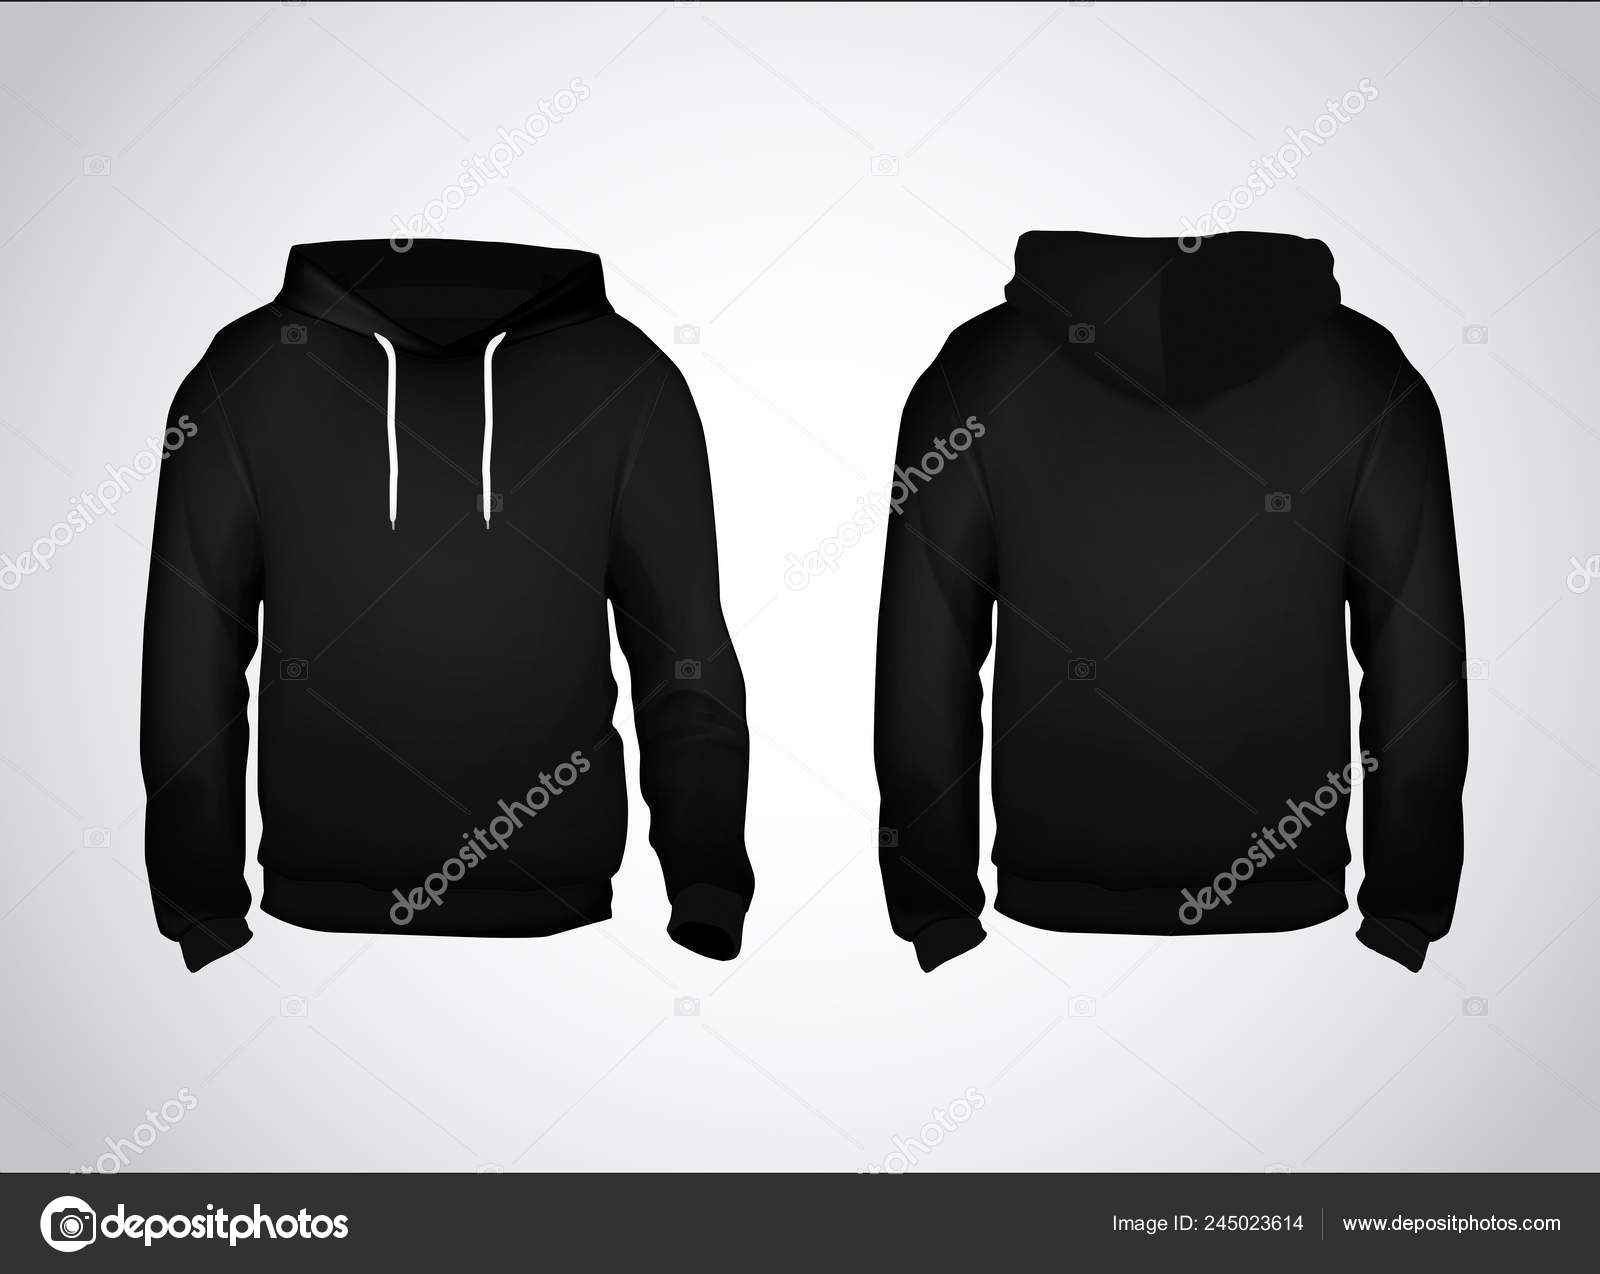 Black Men Sweatshirt Template Sample Text Front Back View Hoodie Vector Image By C Georgerod Vector Stock 245023614